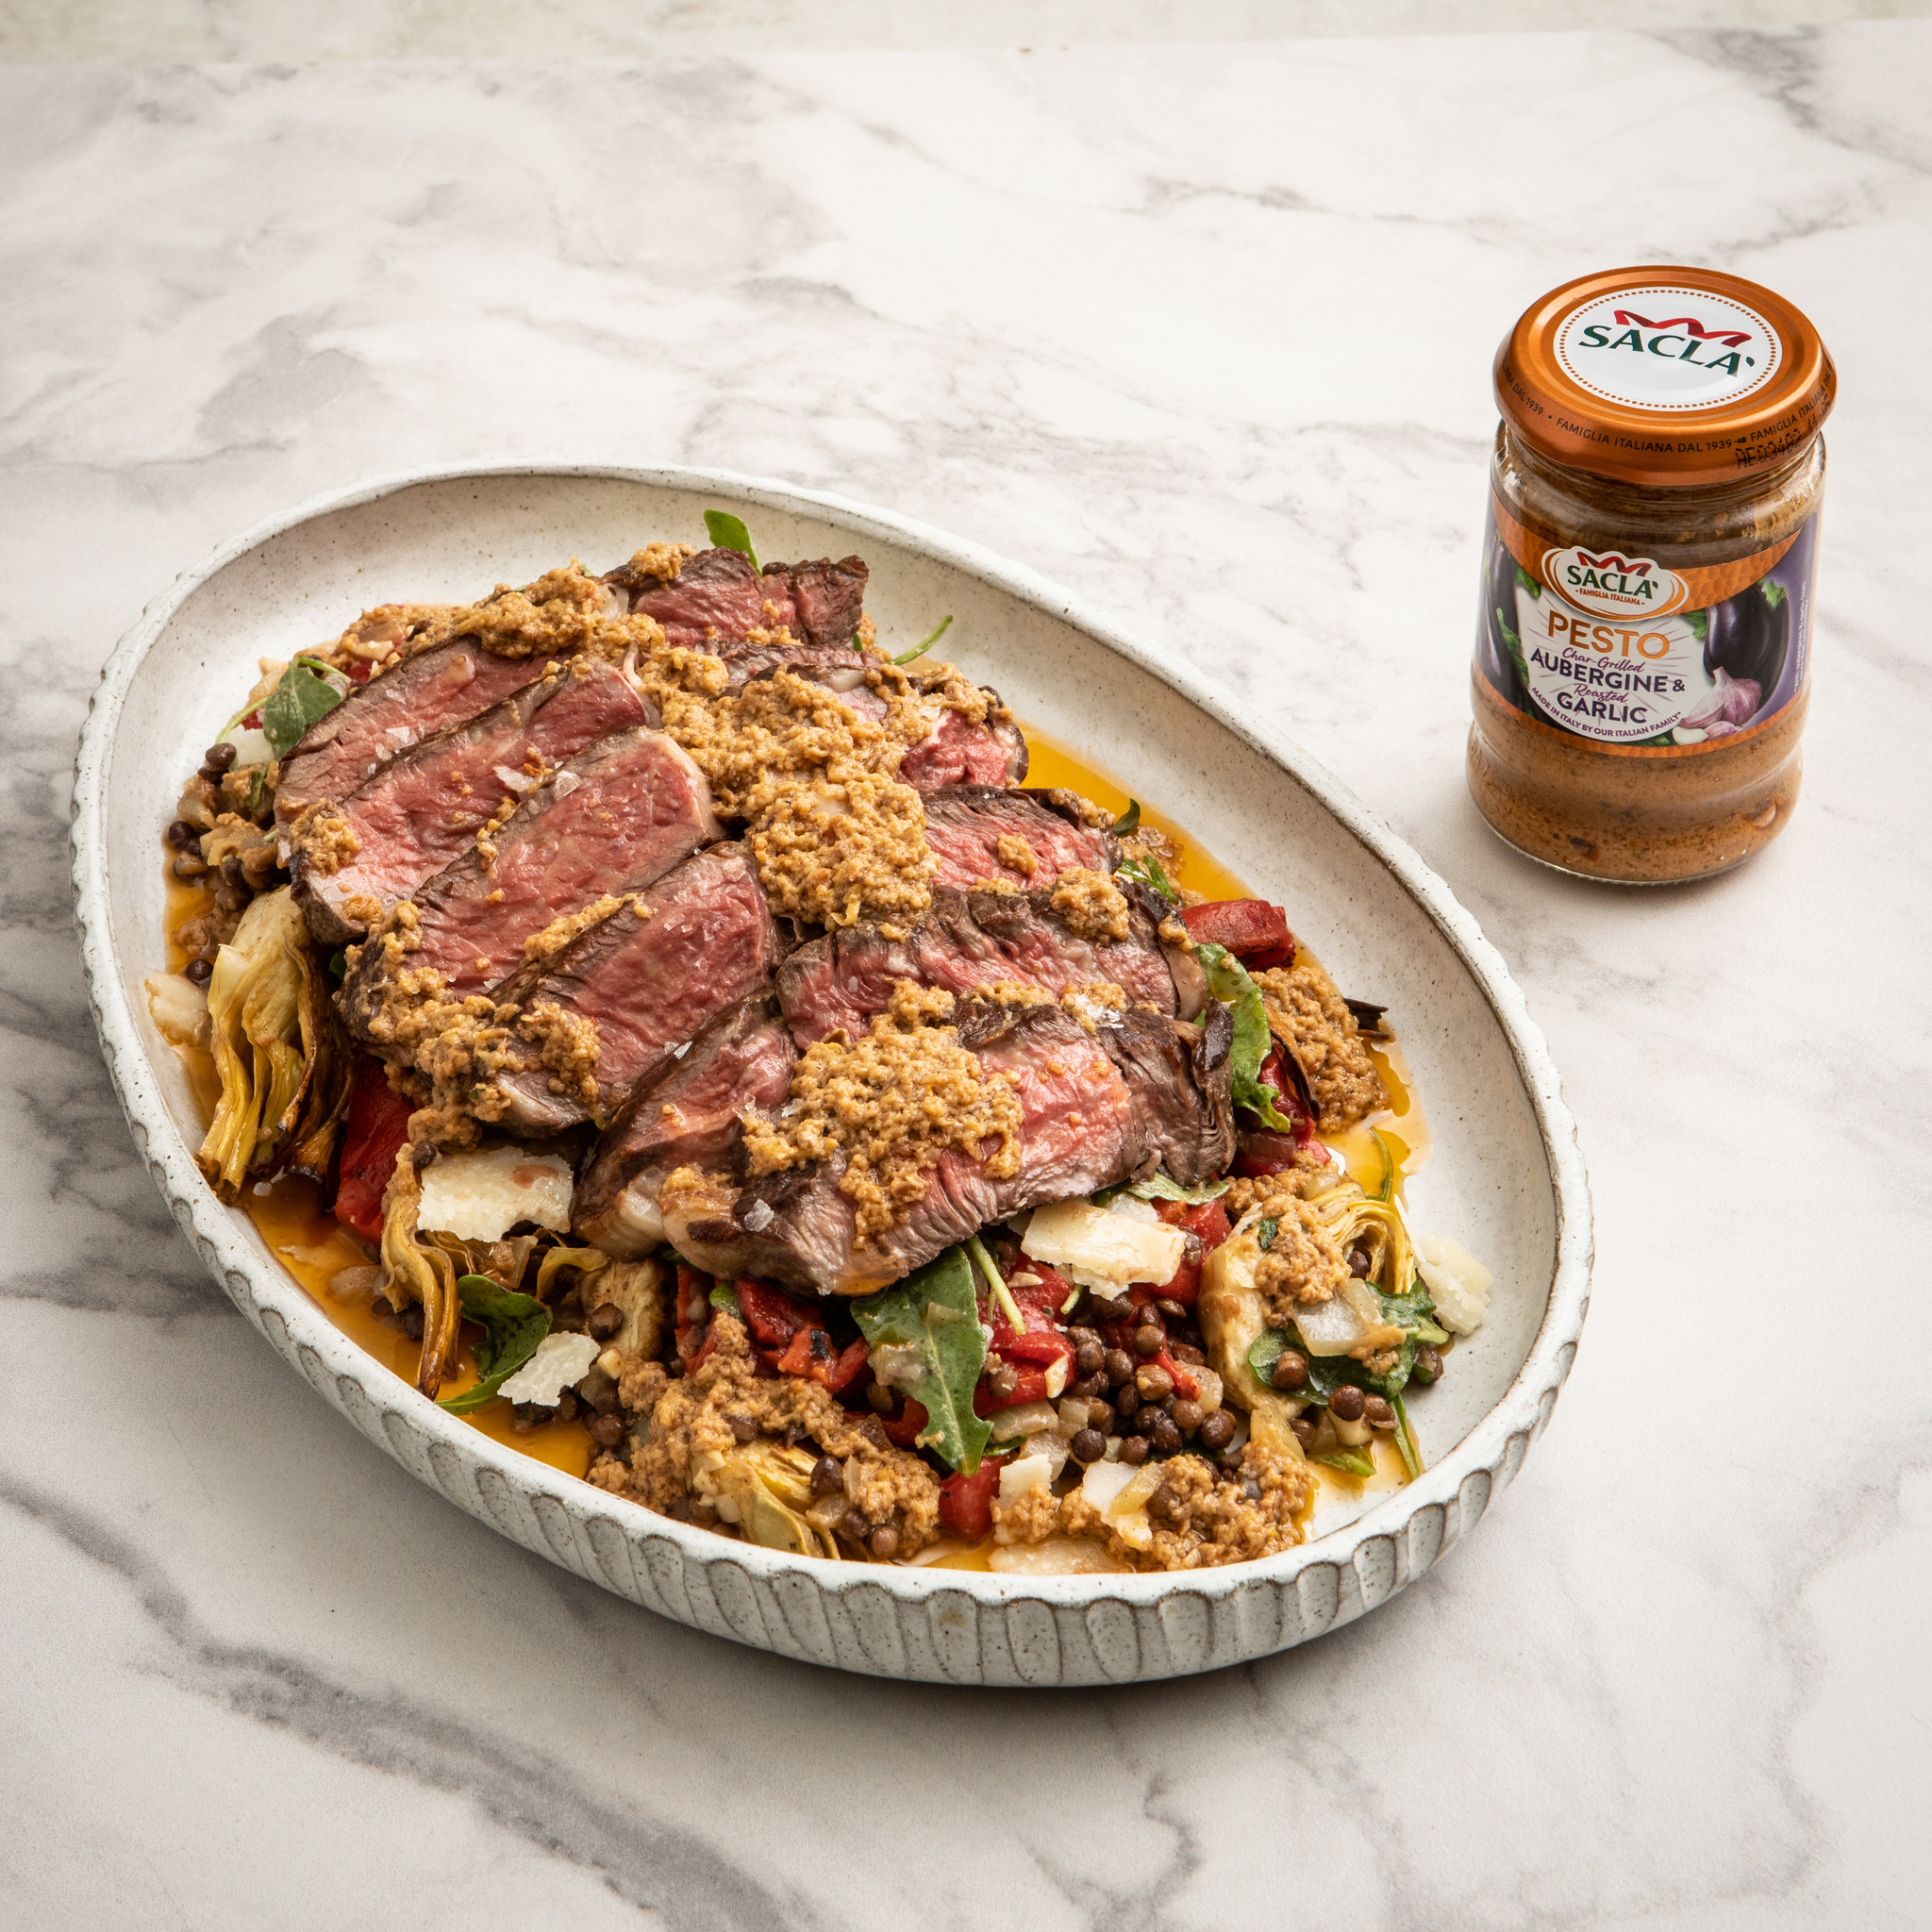 Steak and Lentil Salad with Char-Grilled Aubergine & Garlic Pesto